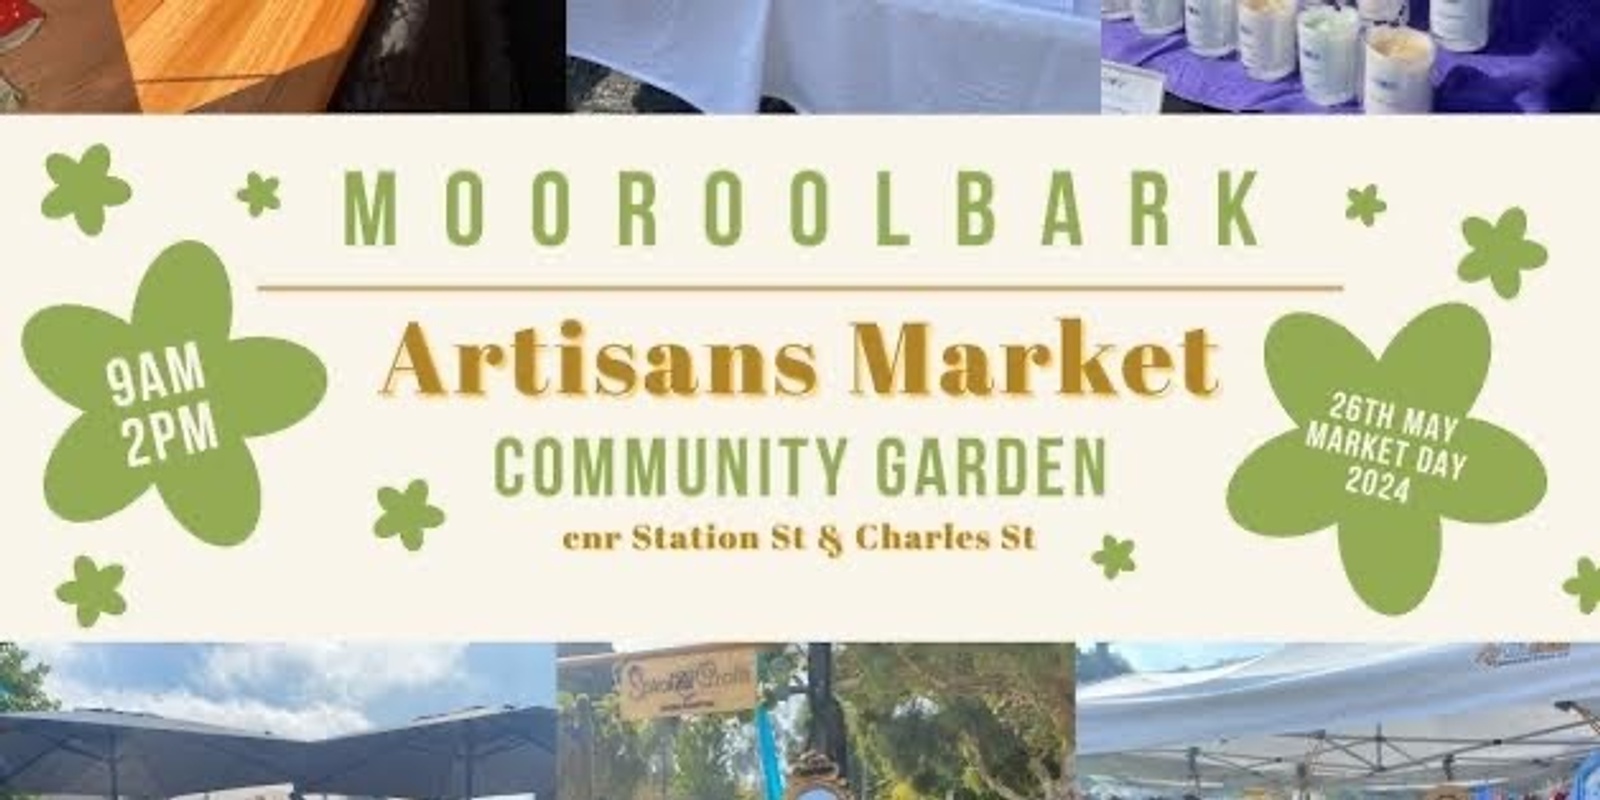 Banner image for 26th May  Artisans Market at the Community Garden |Mooroolbark